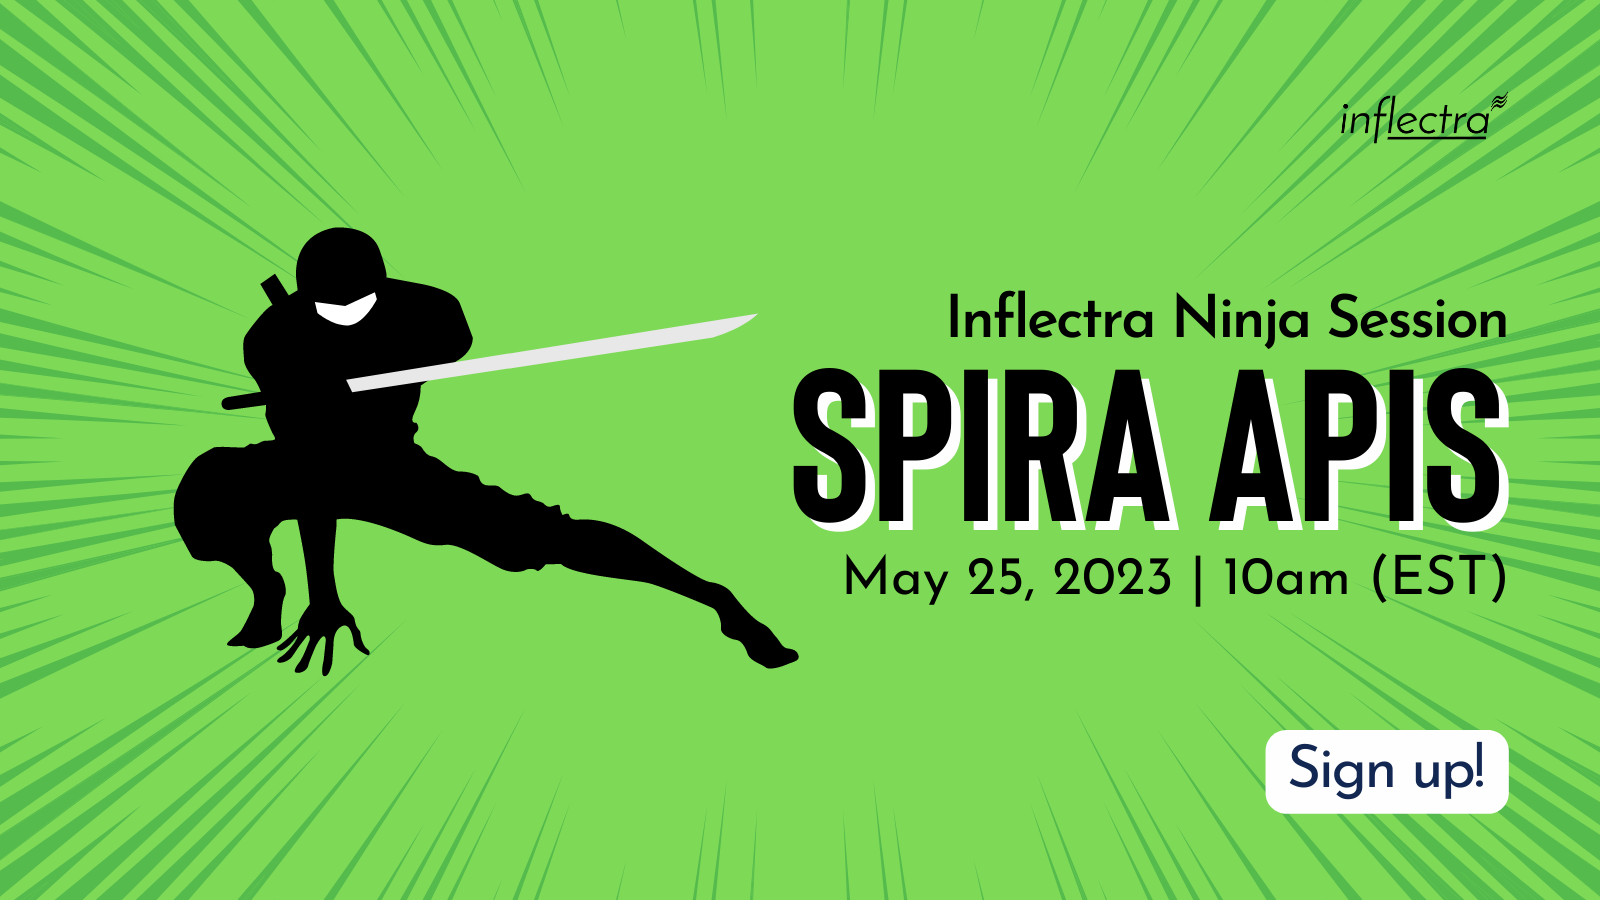 inflectra-ninjas-session-green-background-black-text-spira-apis-image